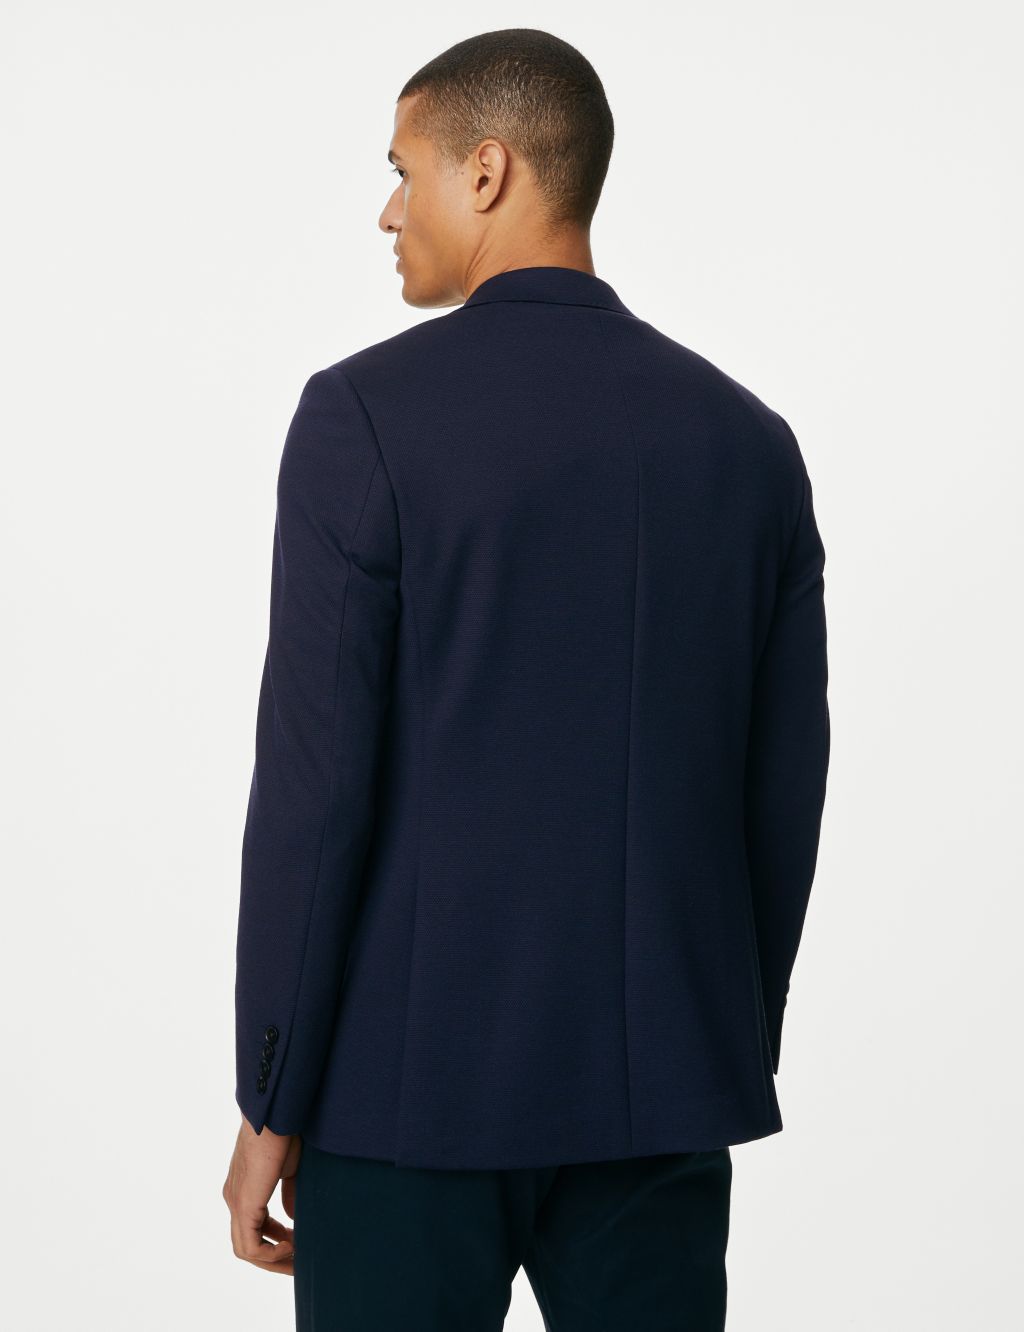 Textured Jersey Jacket image 4